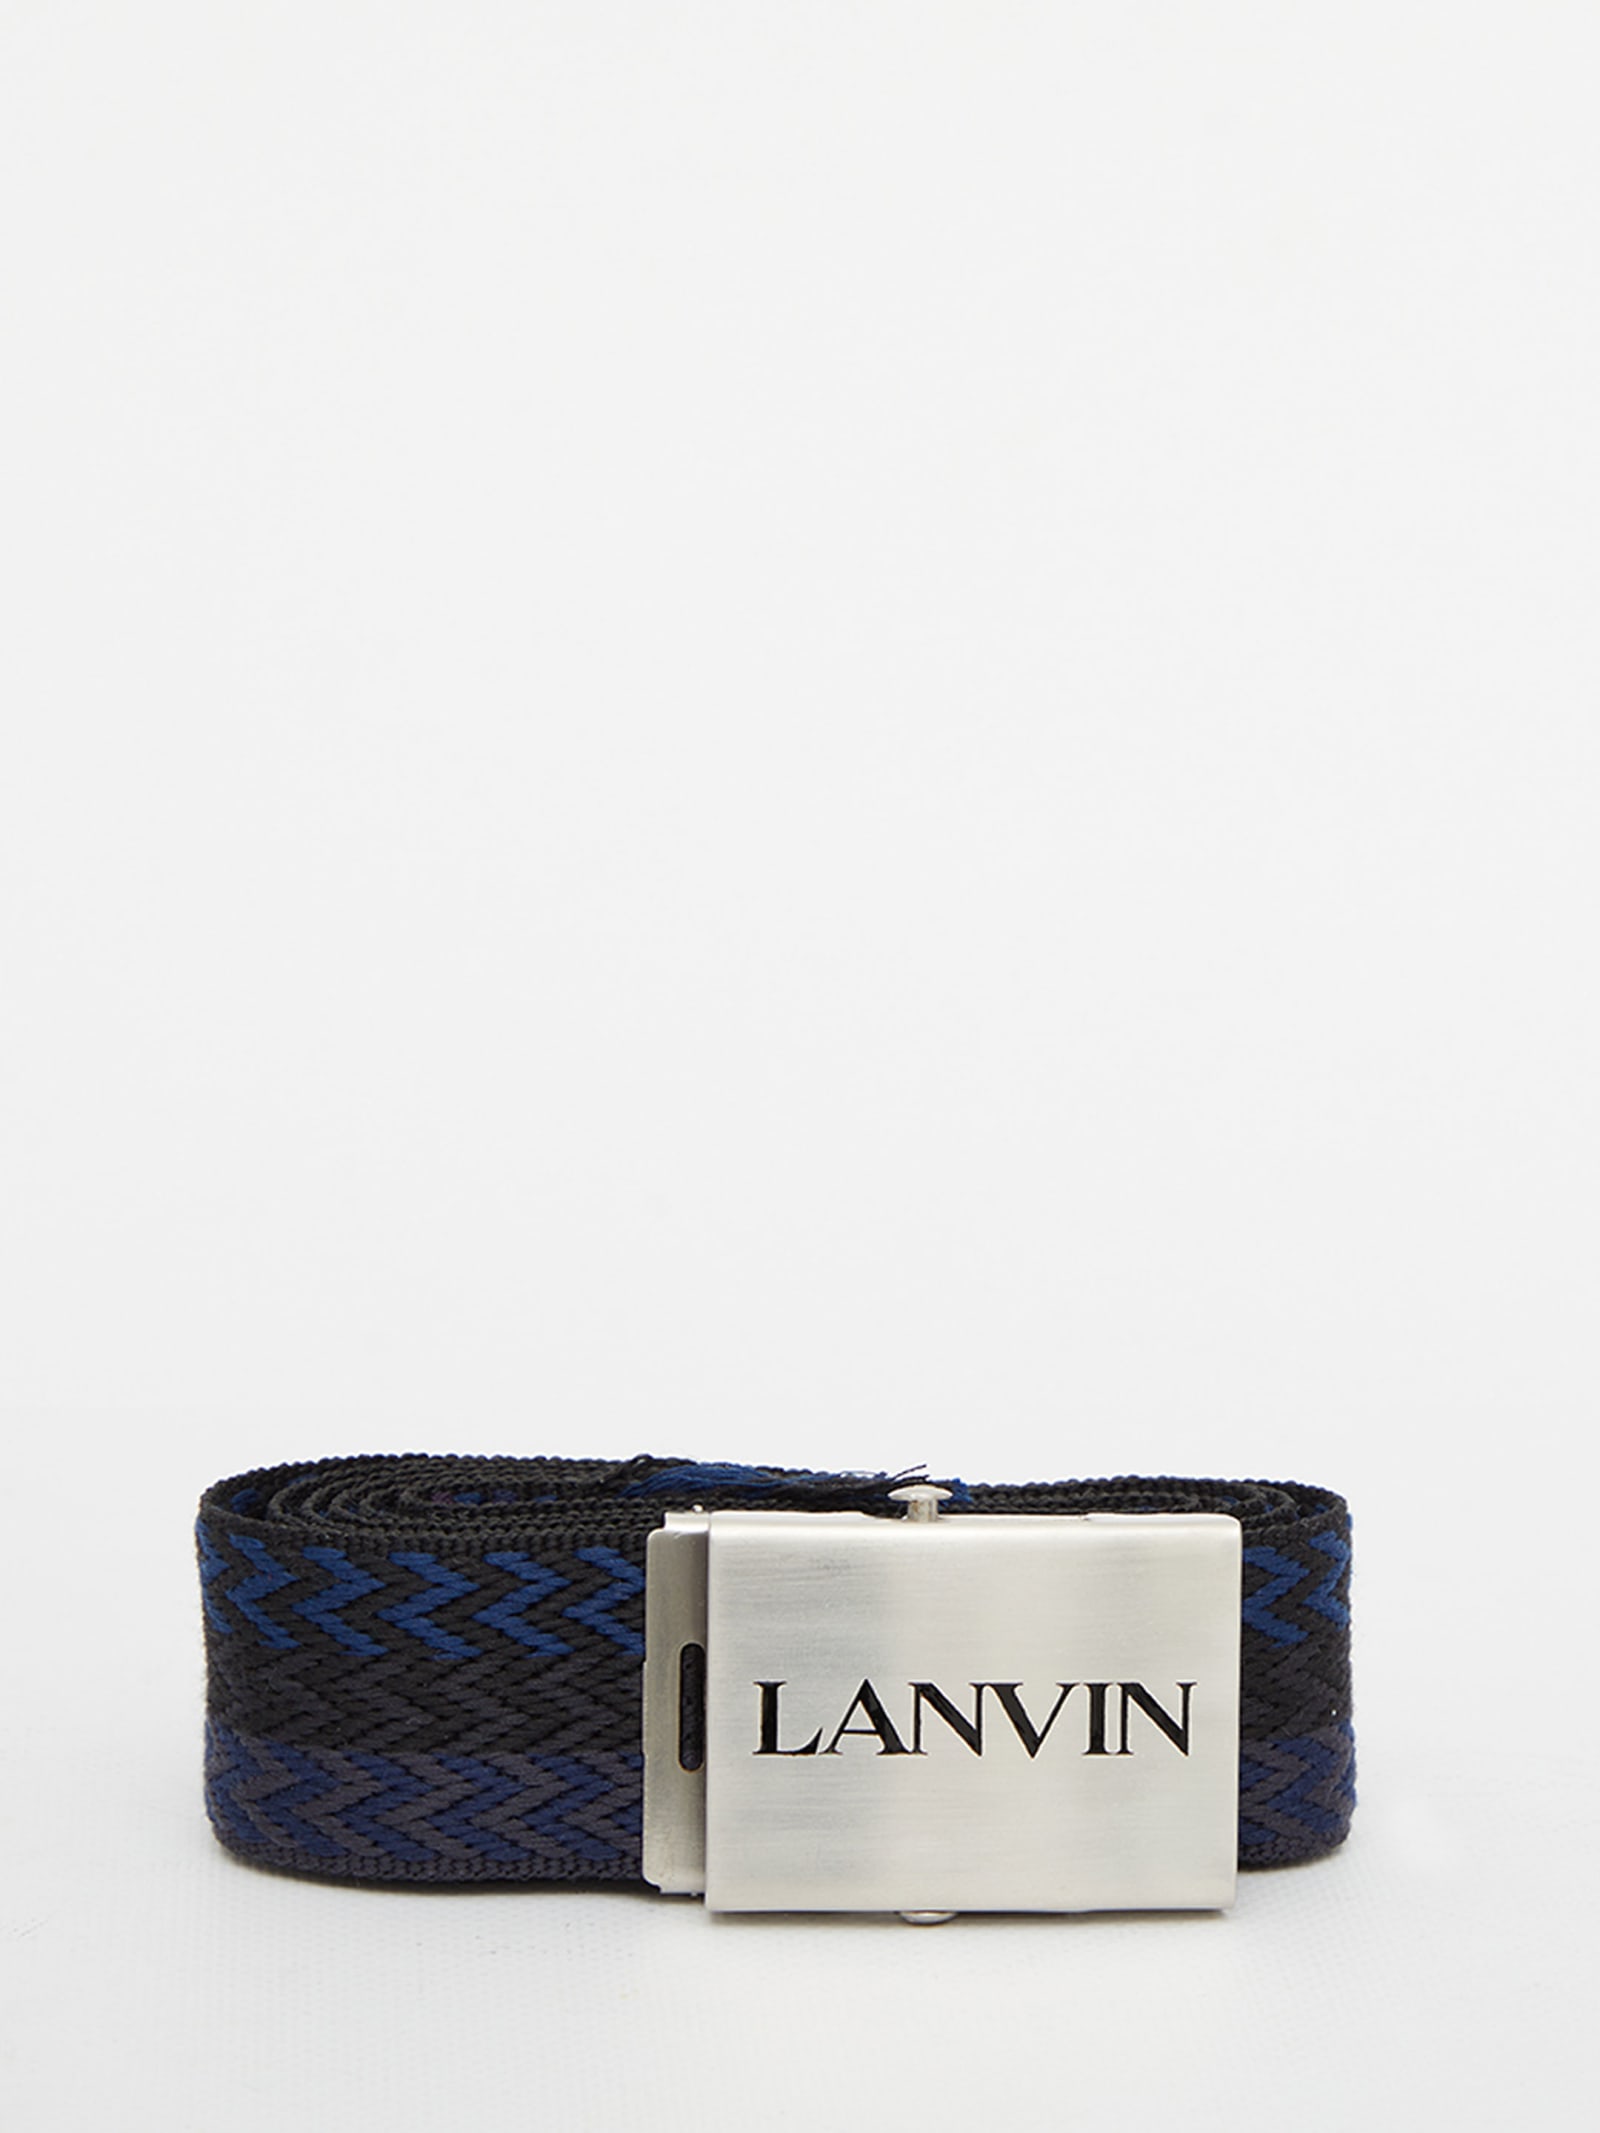 Lanvin Branded Buckle Belt